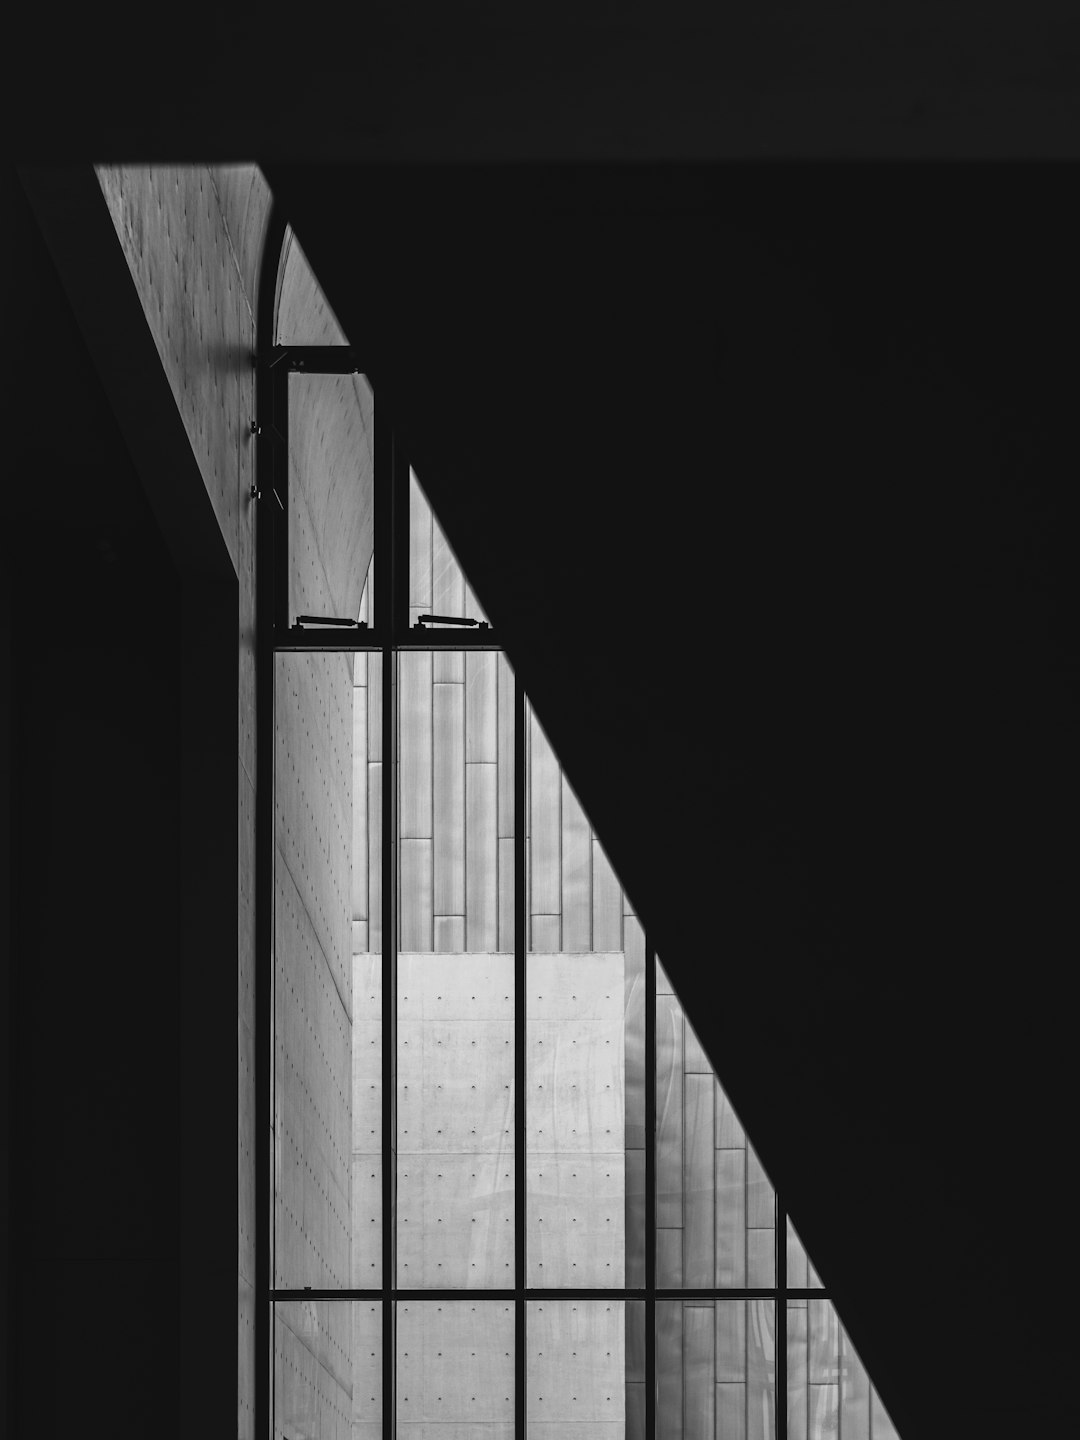 grayscale photo of a window